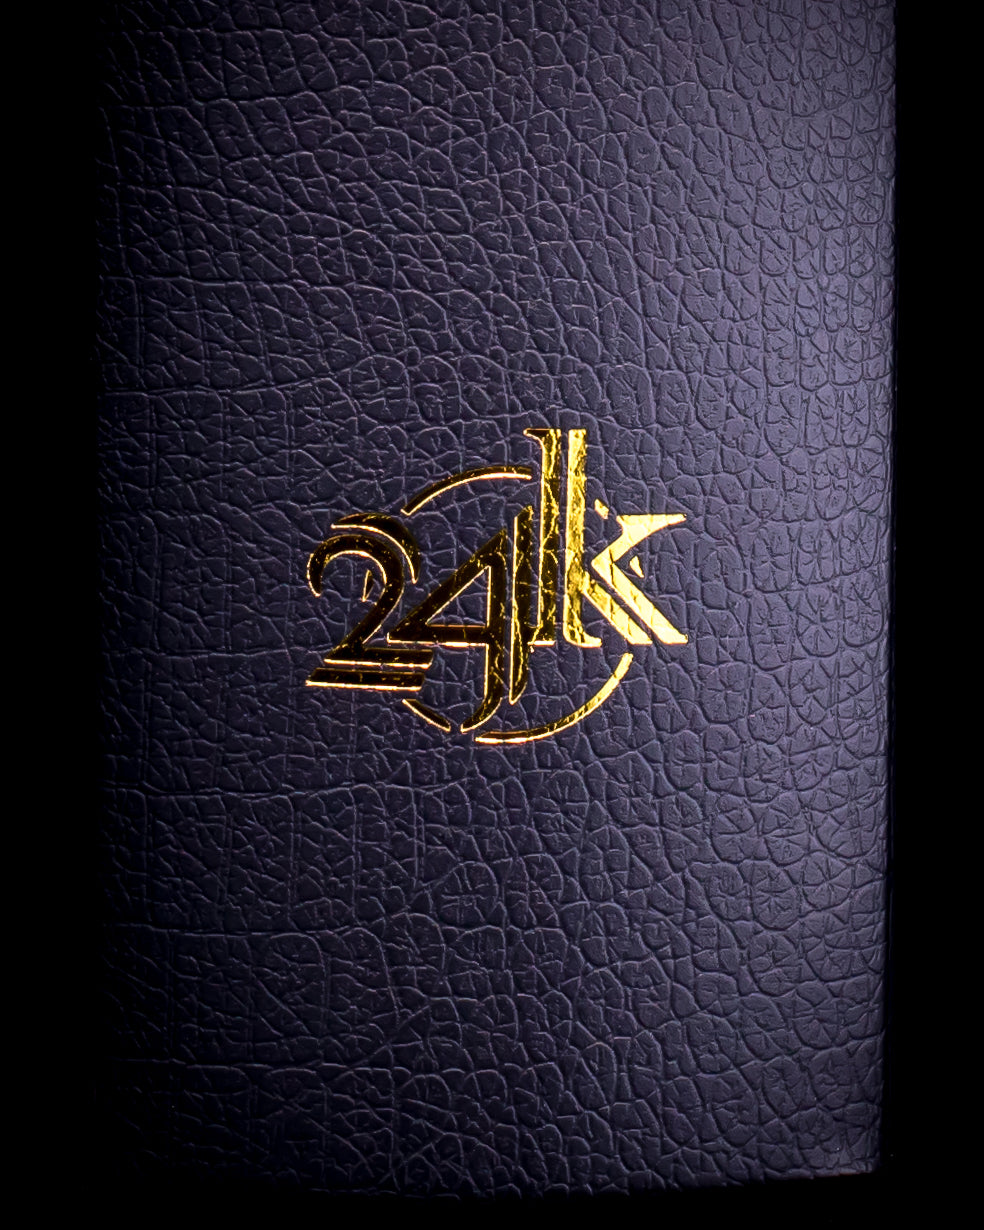 Myster 24k Stashtray Bundle - Close-up of Black Rolling Tray with Gold Emblem